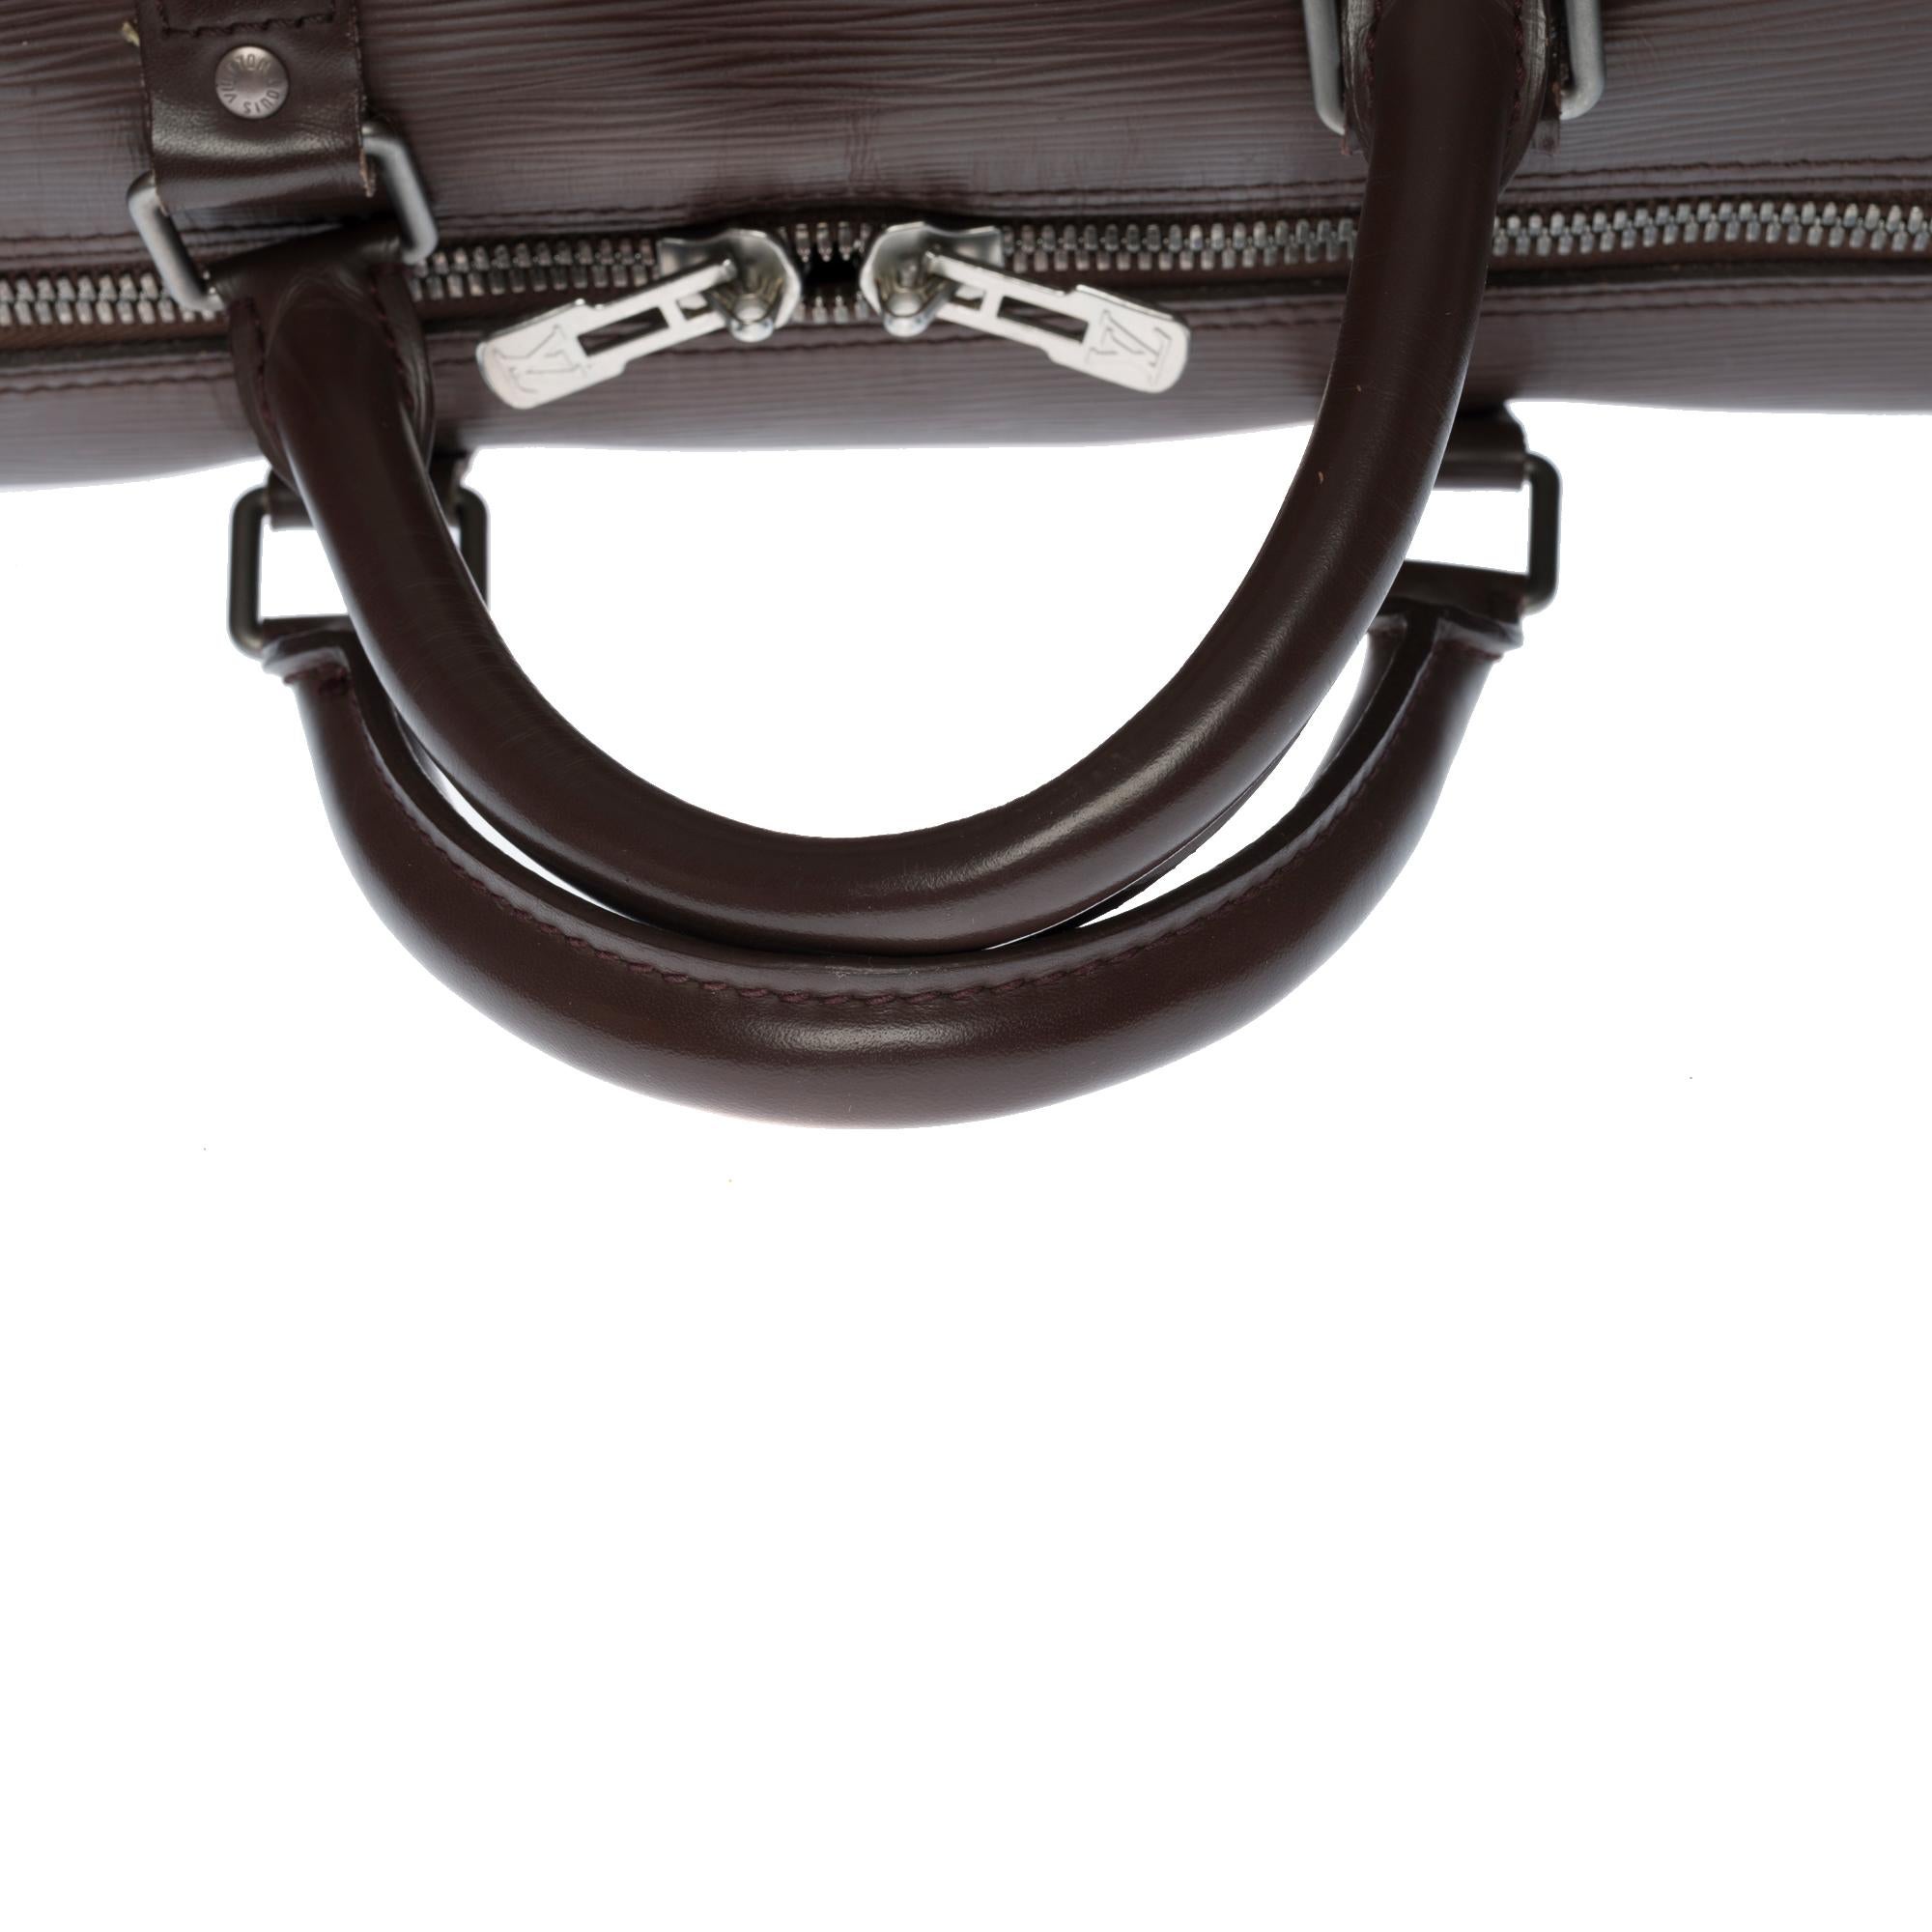 Louis Vuitton Keepall 55 Travel bag in Brown épi leather, matte SHW 3